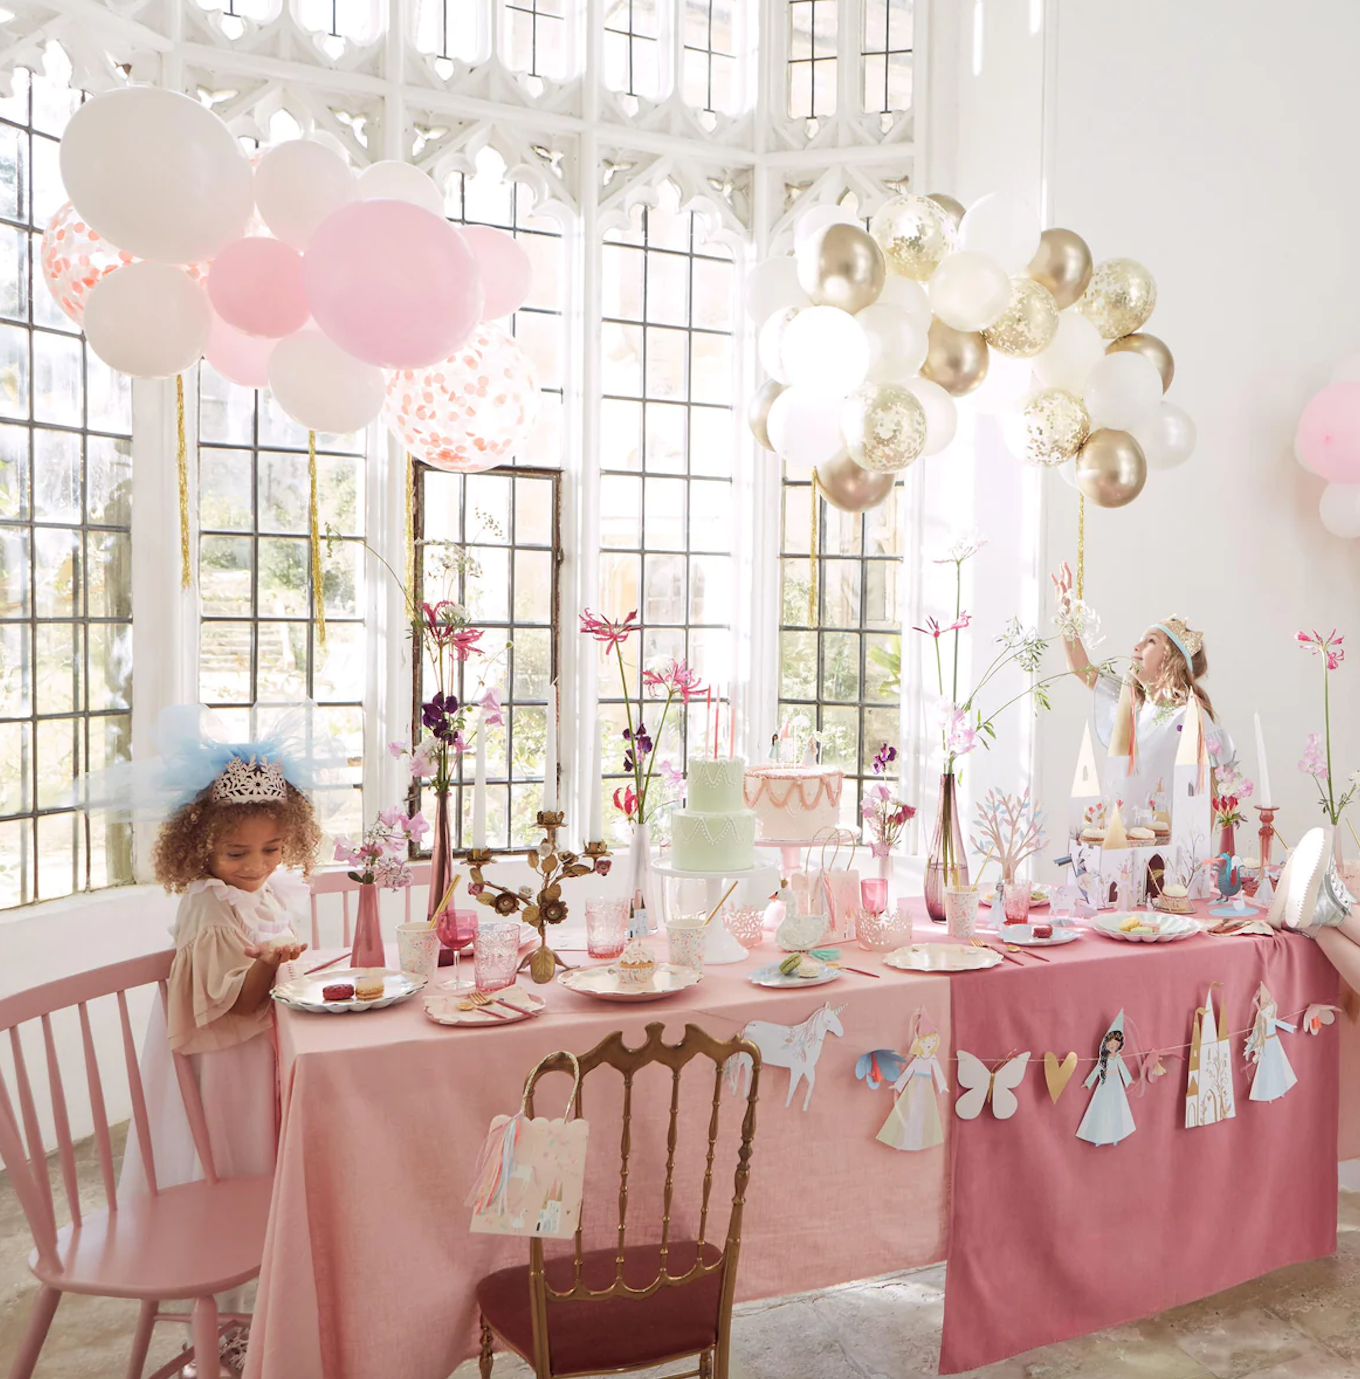 Pink princess birthday party classic chic decor inspiration